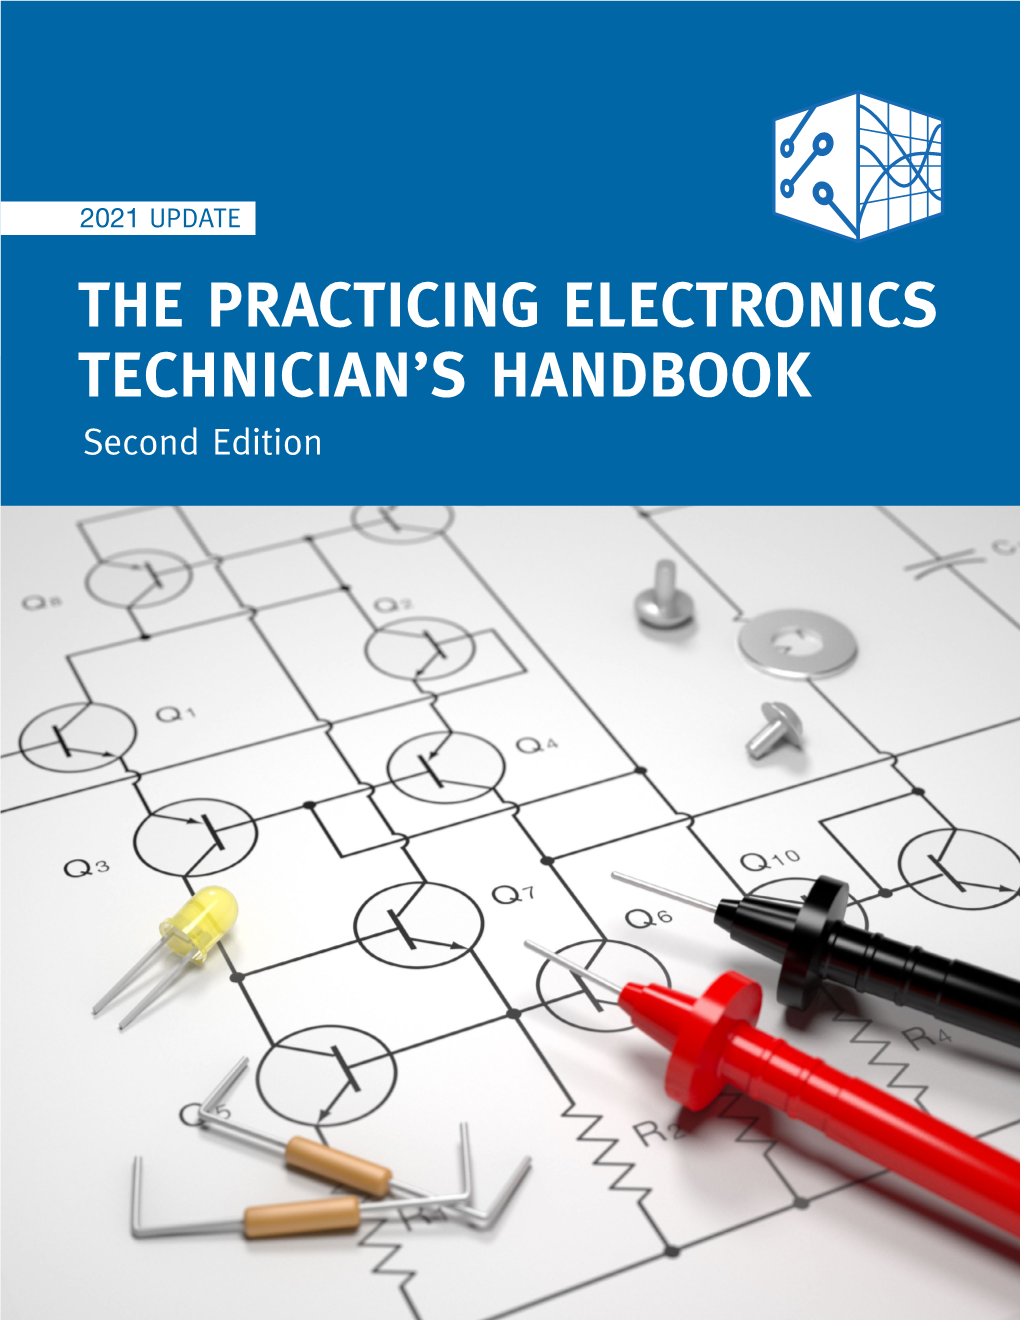 The Practicing Electronics Technician's Handbook